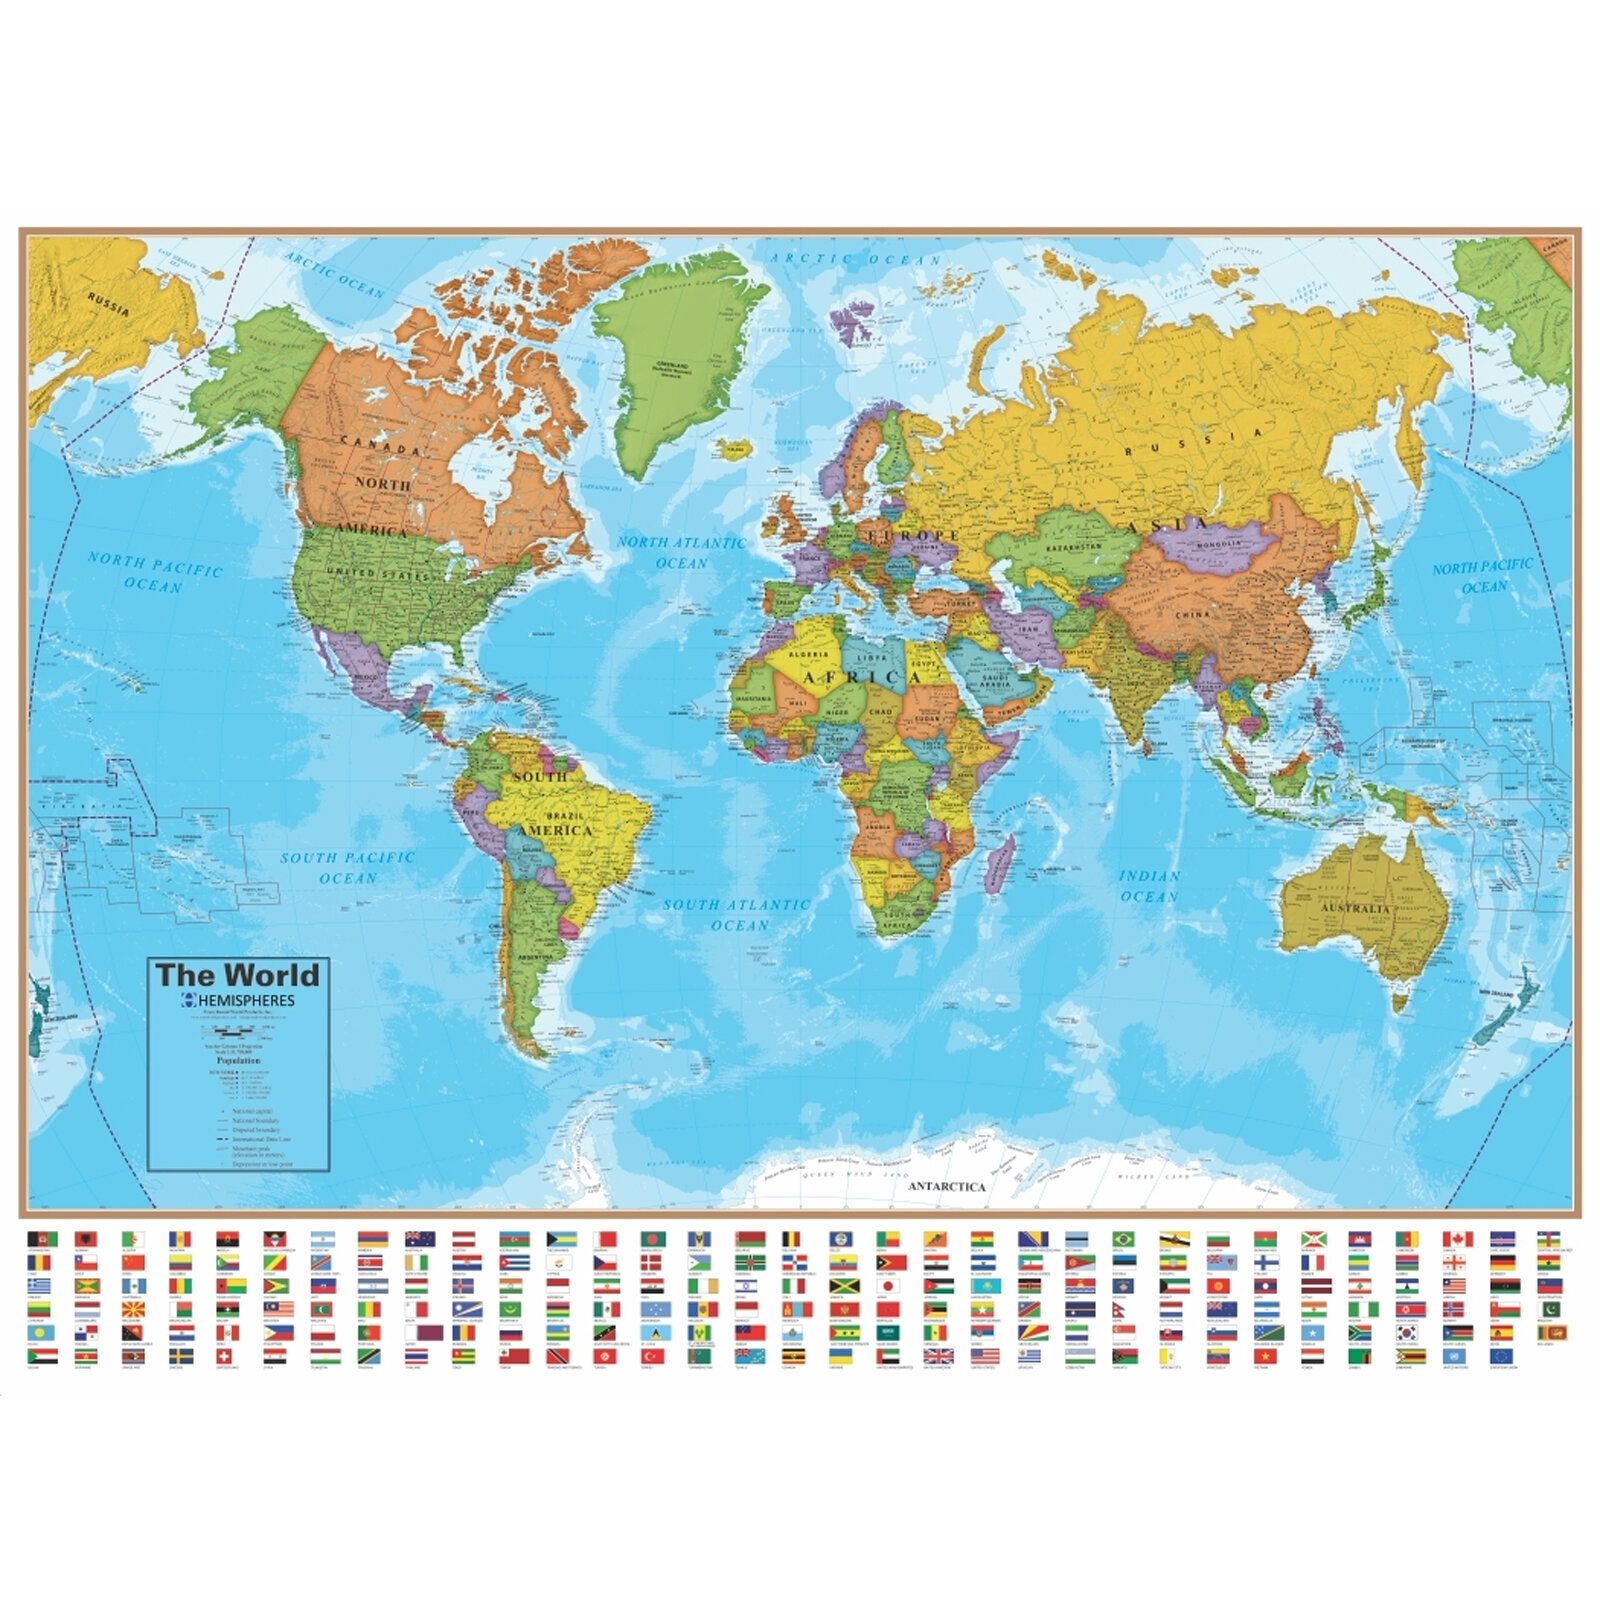 Round World Hemispheres Laminated Map U.S. World, 38 x 48